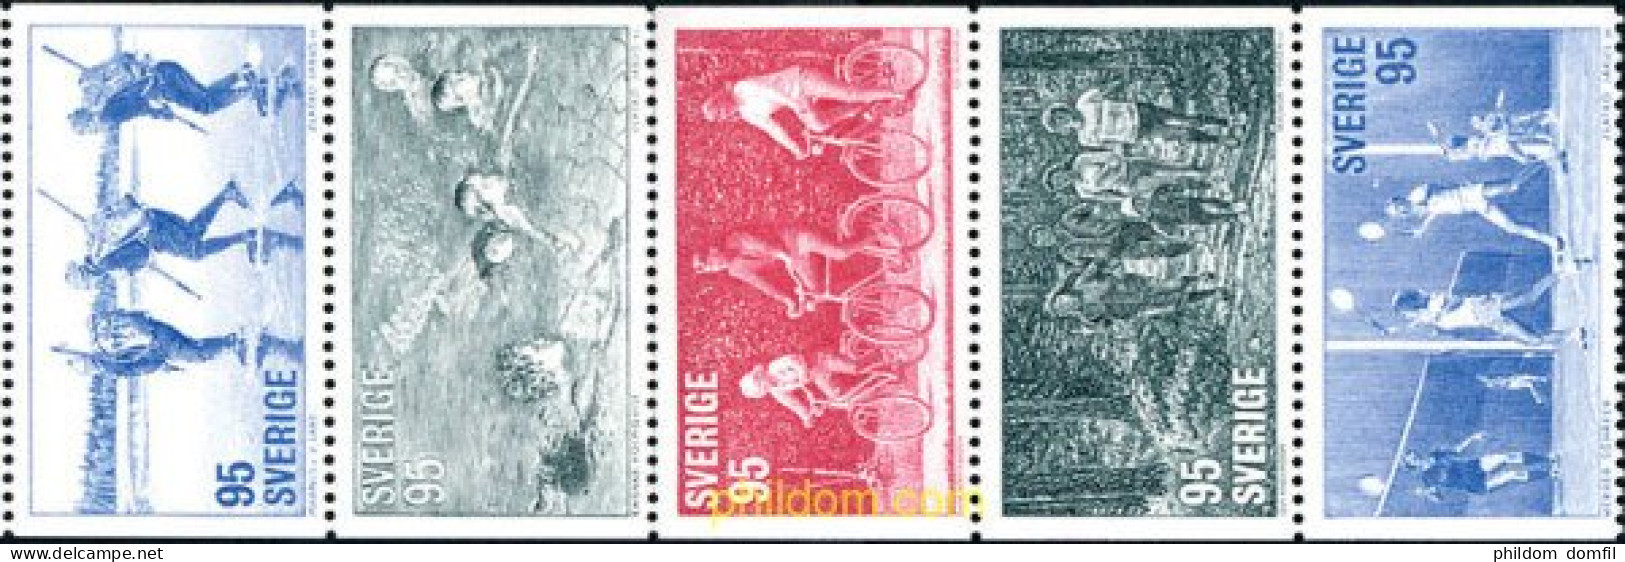 113141 MNH SUECIA 1977 DEPORTES POPULARES - Unused Stamps